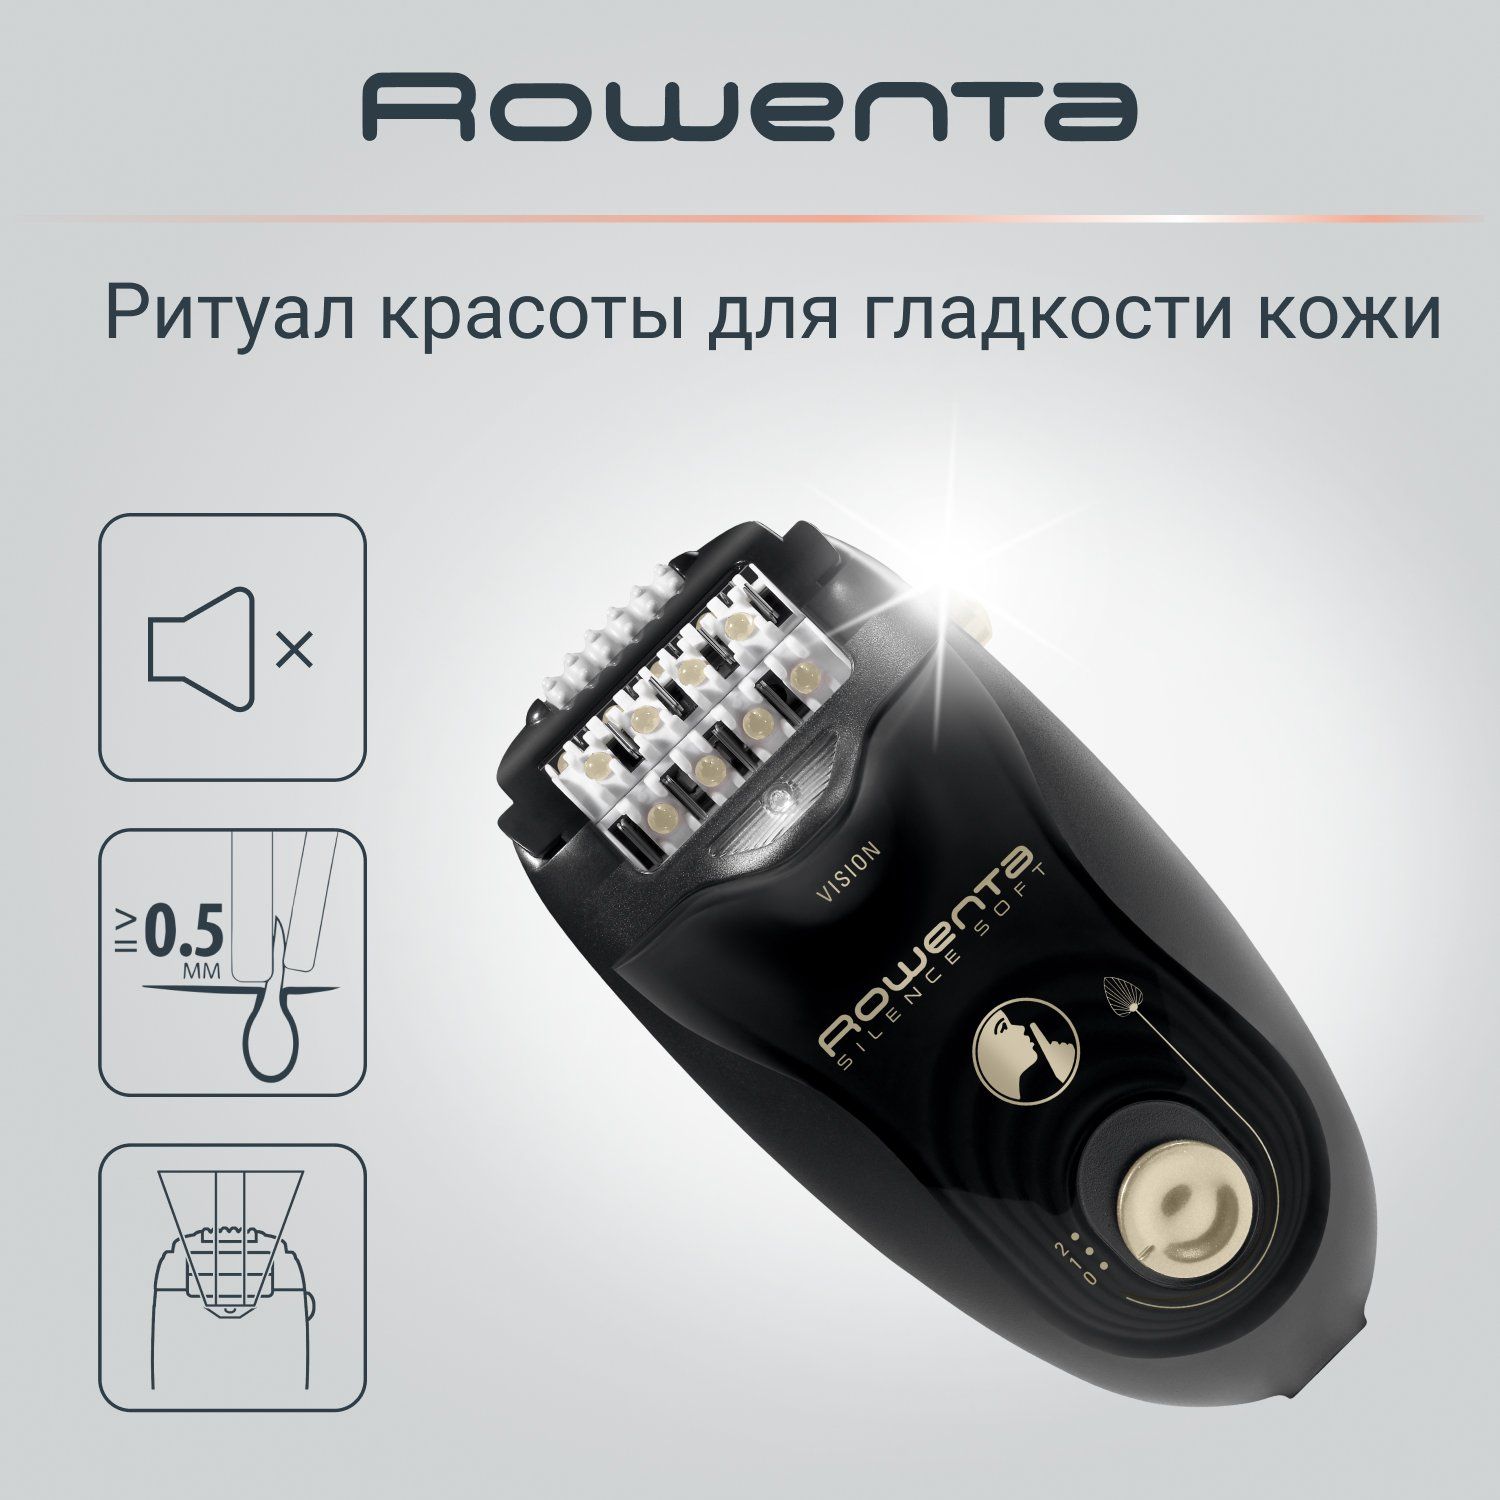 Эпилятор Rowenta Silence Soft EP5628F0, черный эпилятор rowenta silence soft ep5628f0